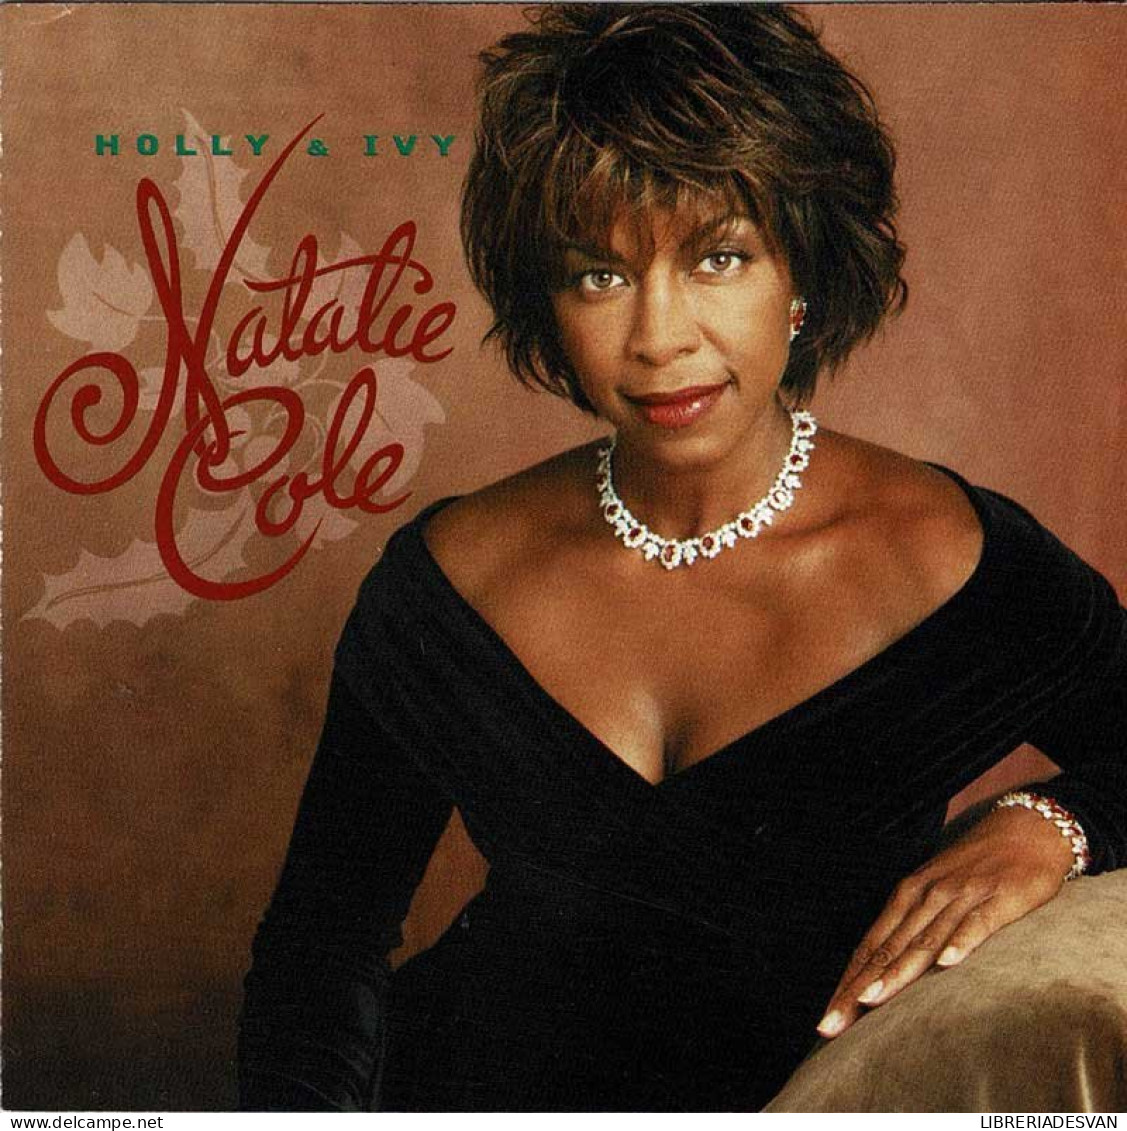 Natalie Cole - Holly & Ivy. CD - Jazz